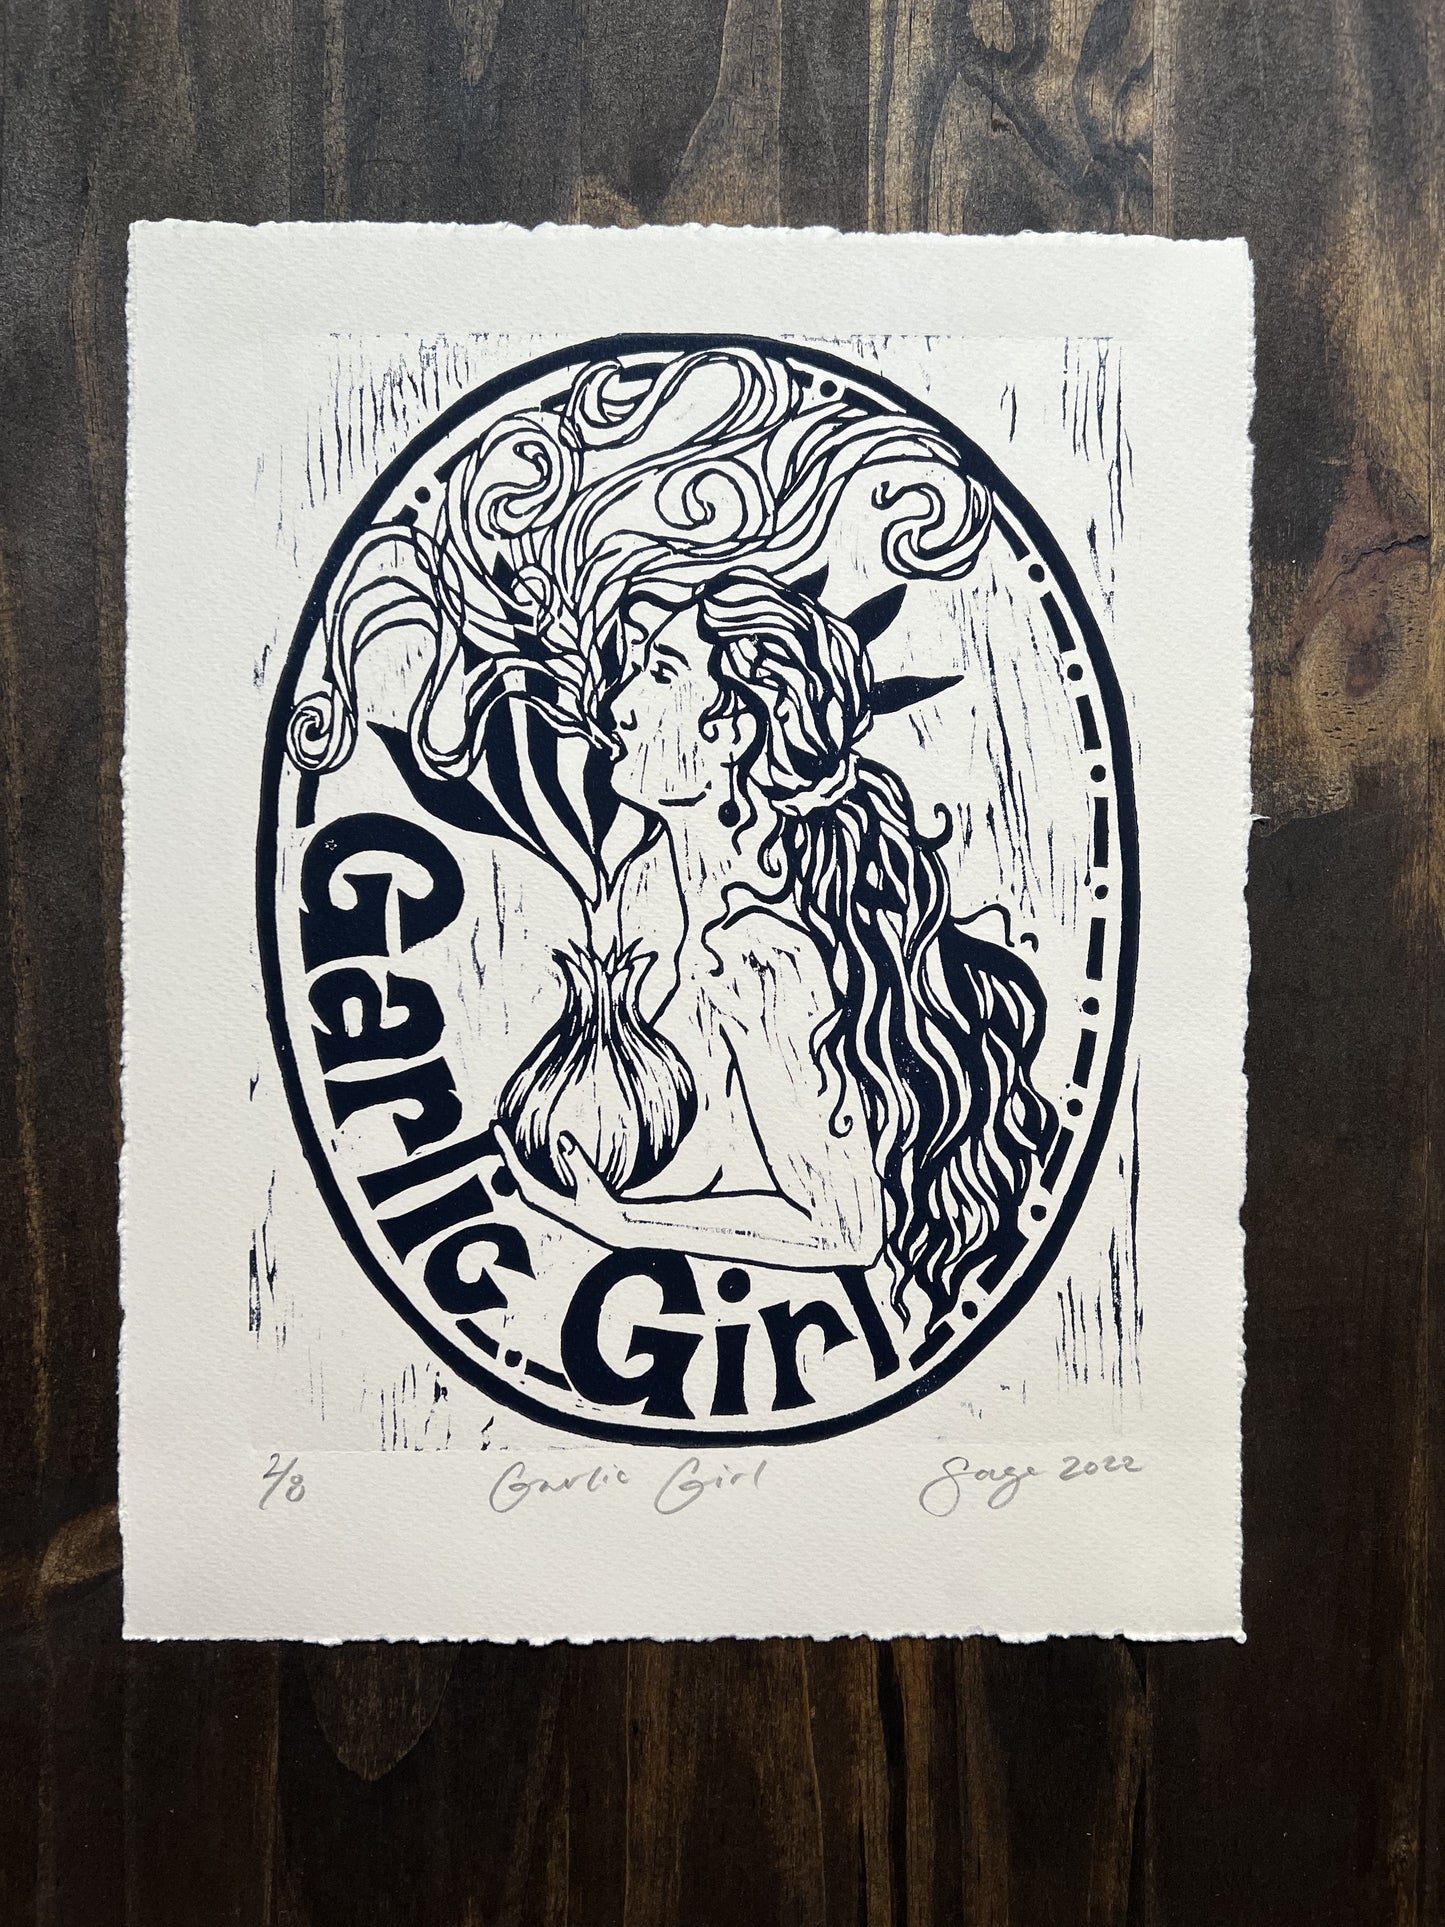 Garlic Girl Original Print